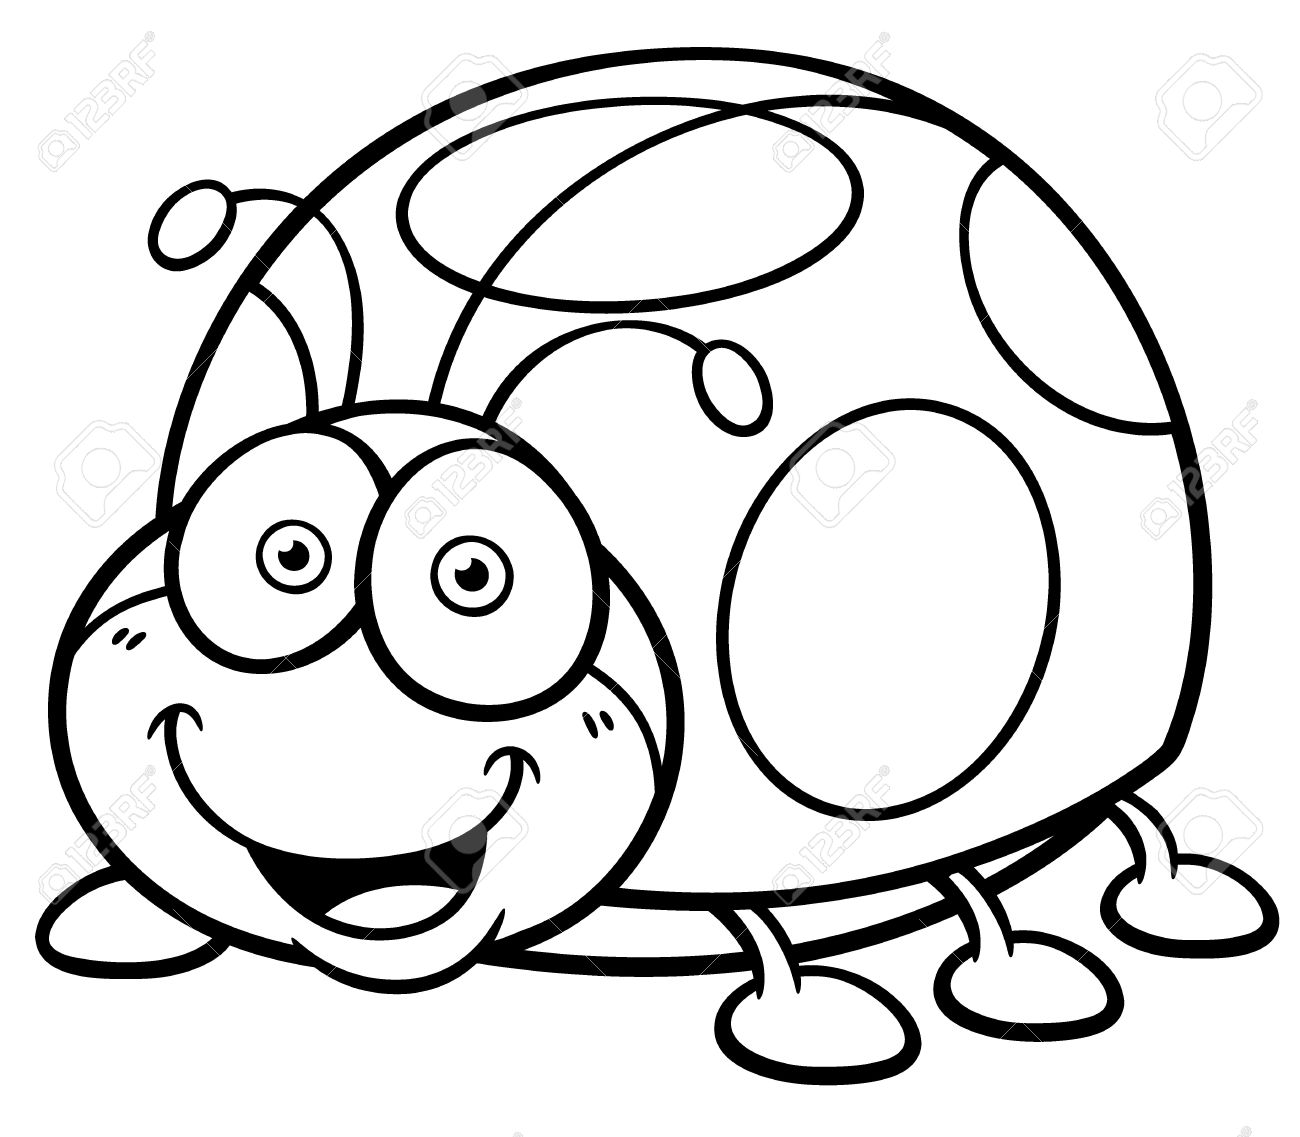 Ladybug Cartoon Drawing at GetDrawings.com | Free for ...